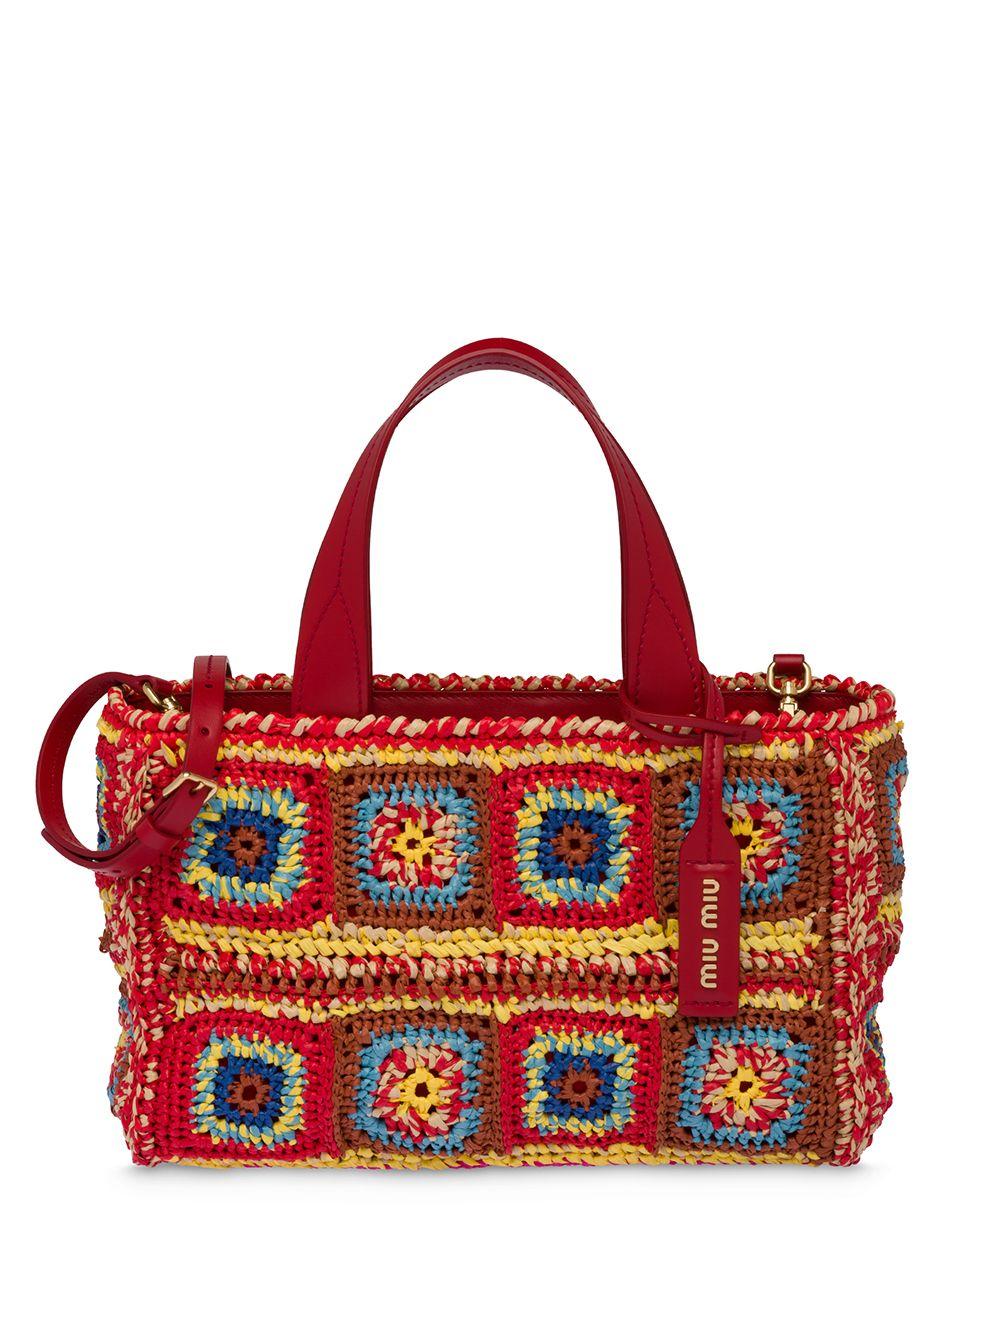 Miu Miu Crochet Handbag in Red | Lyst